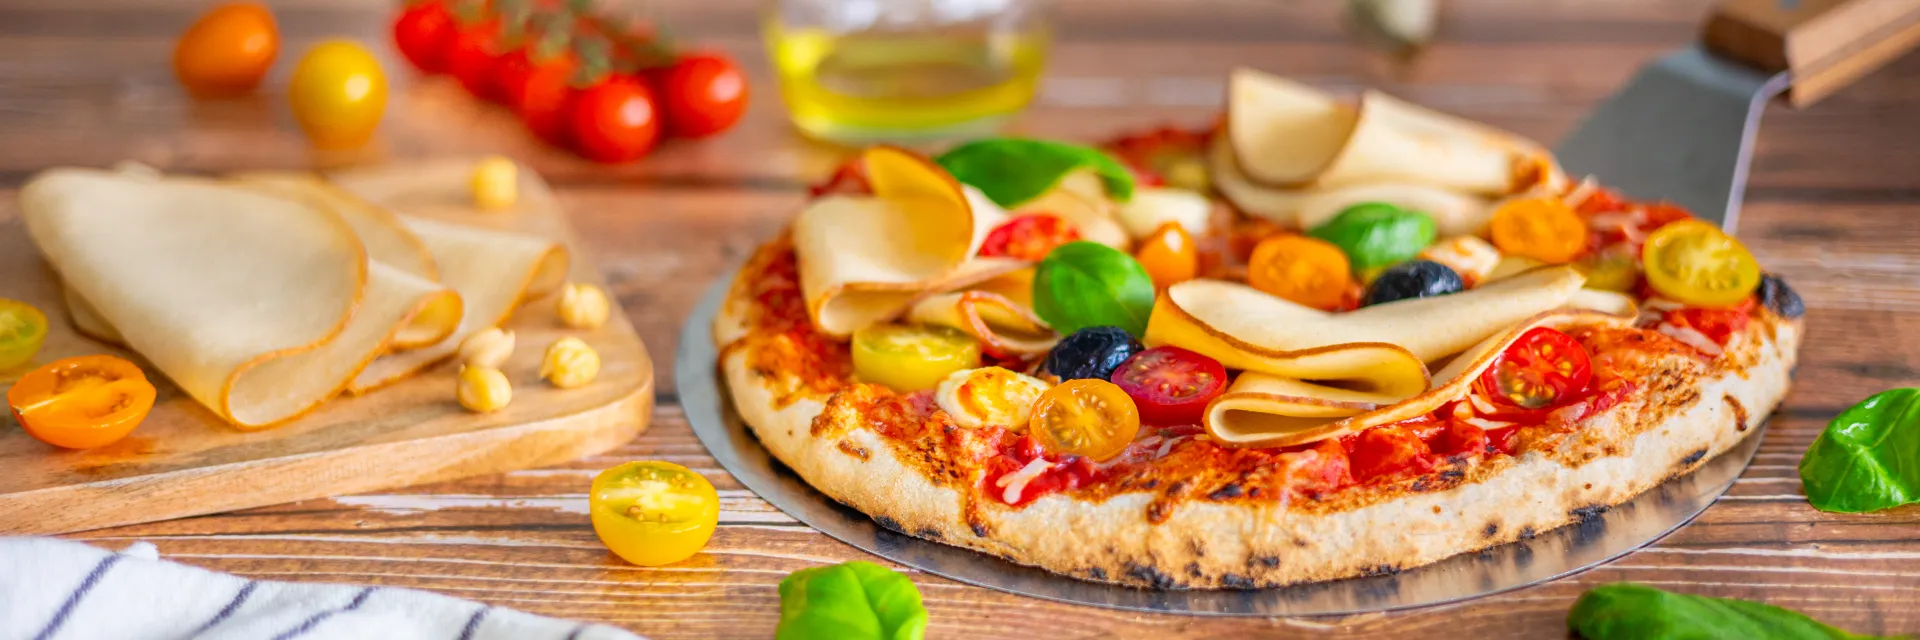 Pizza tomate mozzarella Tranches Végé Fleury Michon header 